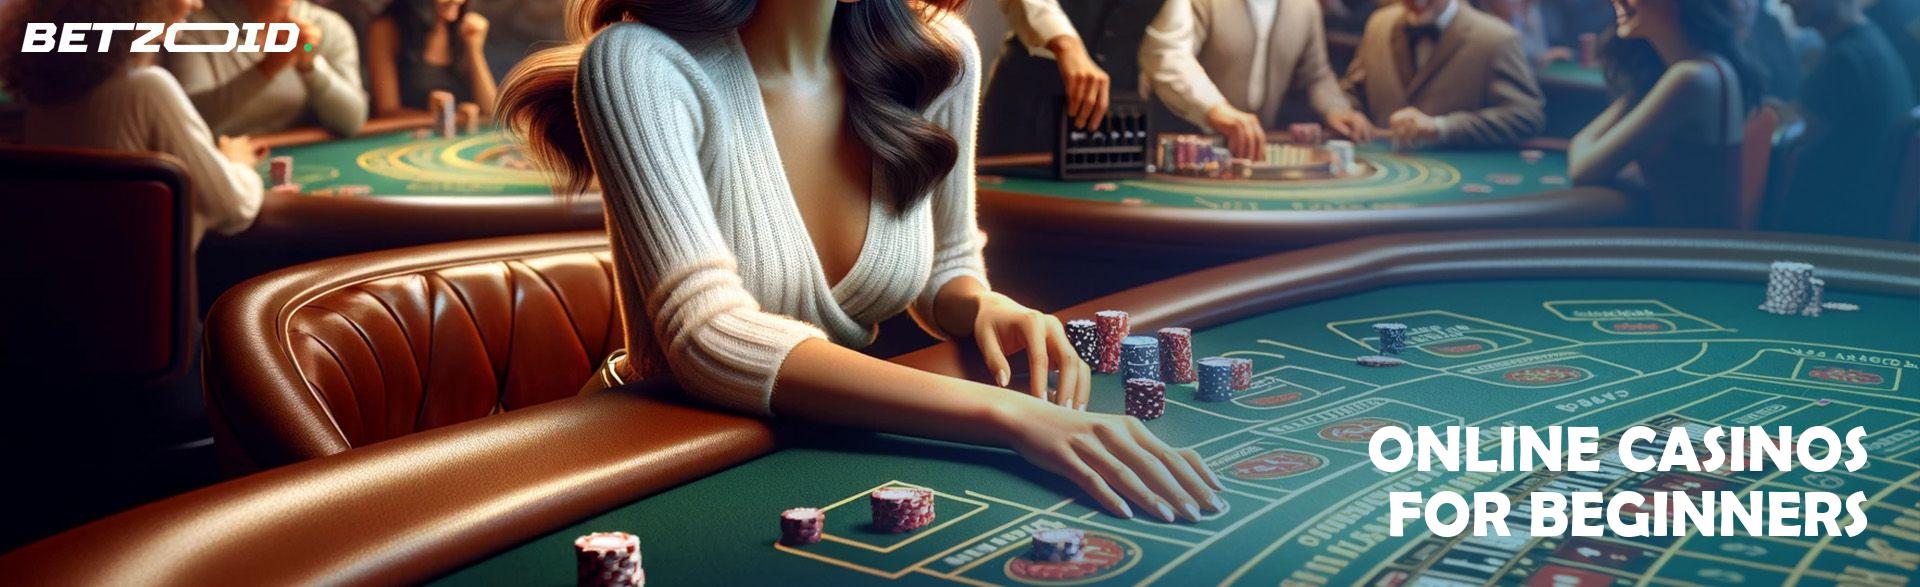 Online Casinos For Beginners.